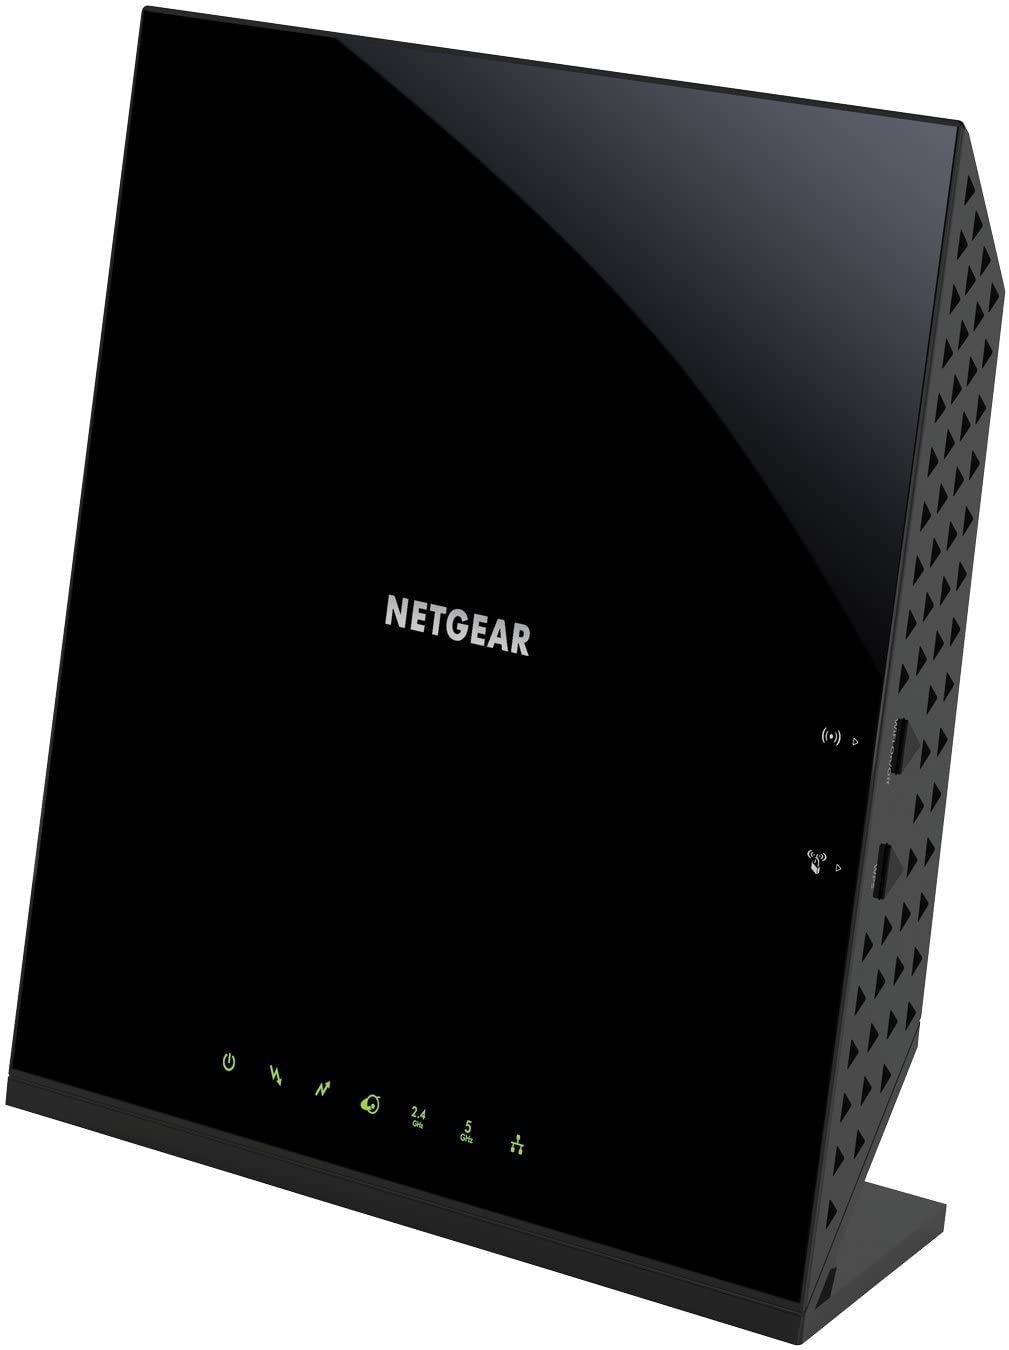 NETGEAR - Dual-Band AC1600 Router w/ 16x4 DOCSIS 3.0 Cable Modem